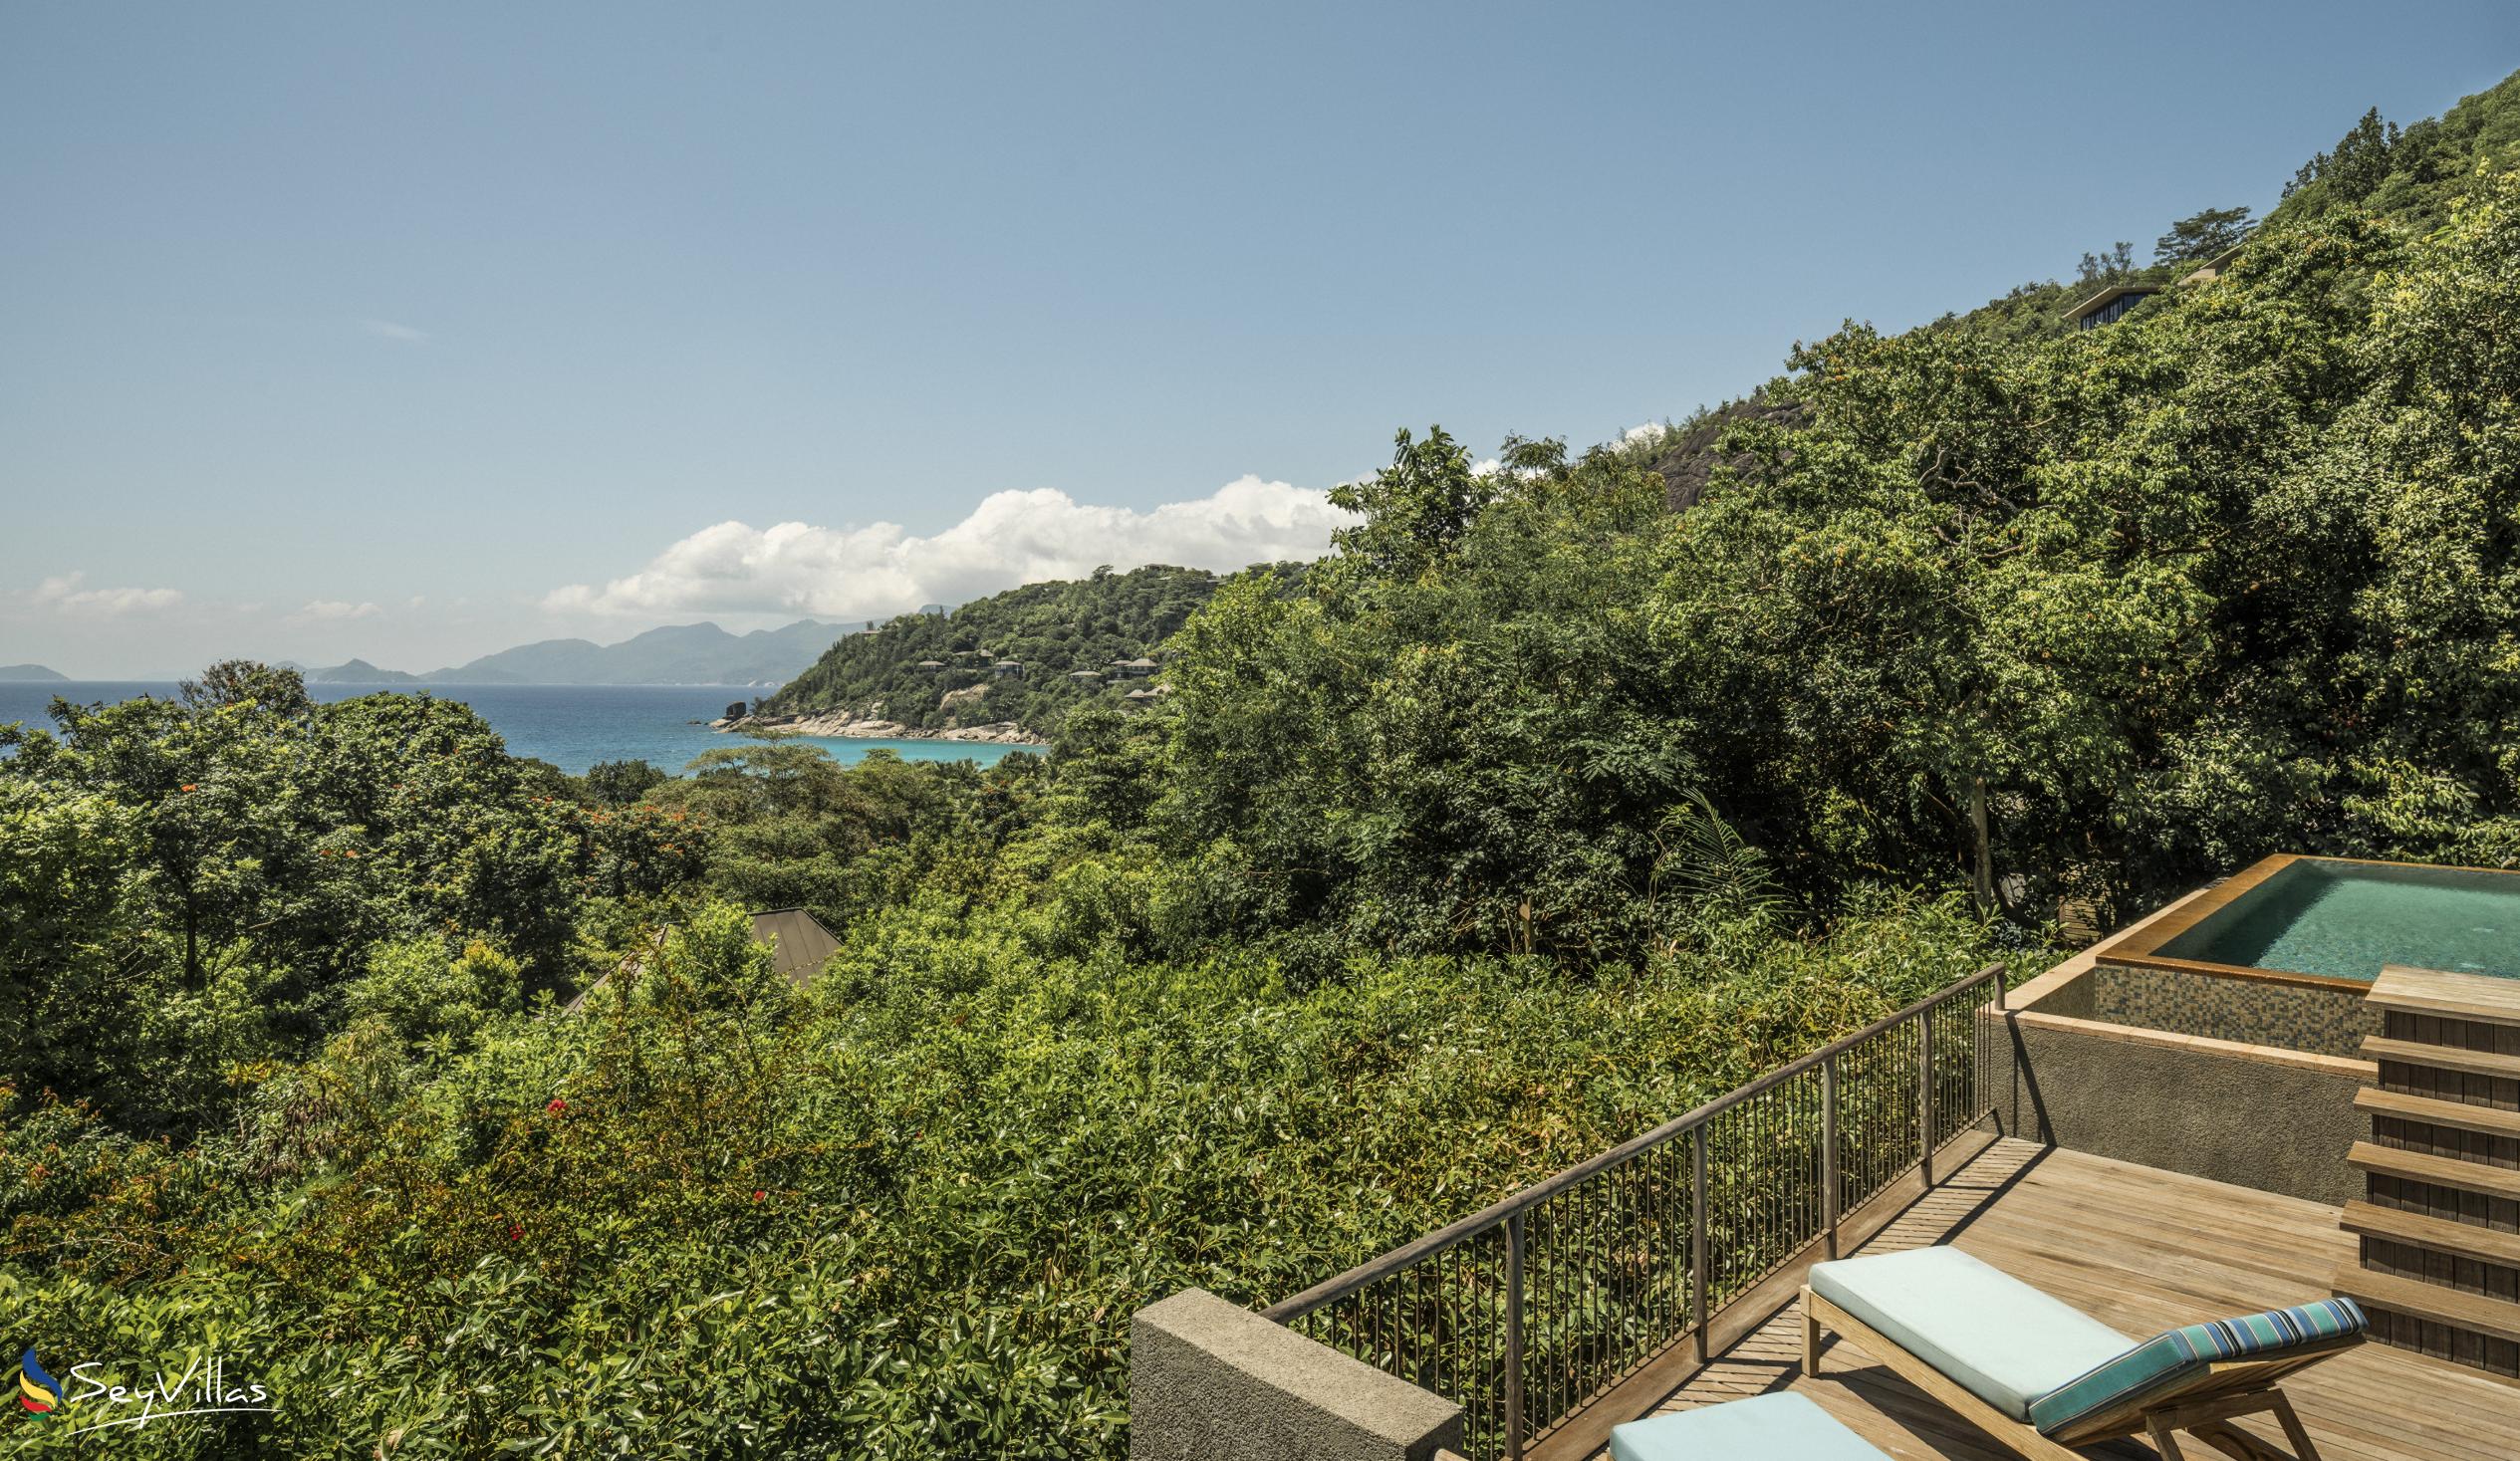 Foto 34: Four Seasons Resort - Ocean View Villa - Mahé (Seychelles)